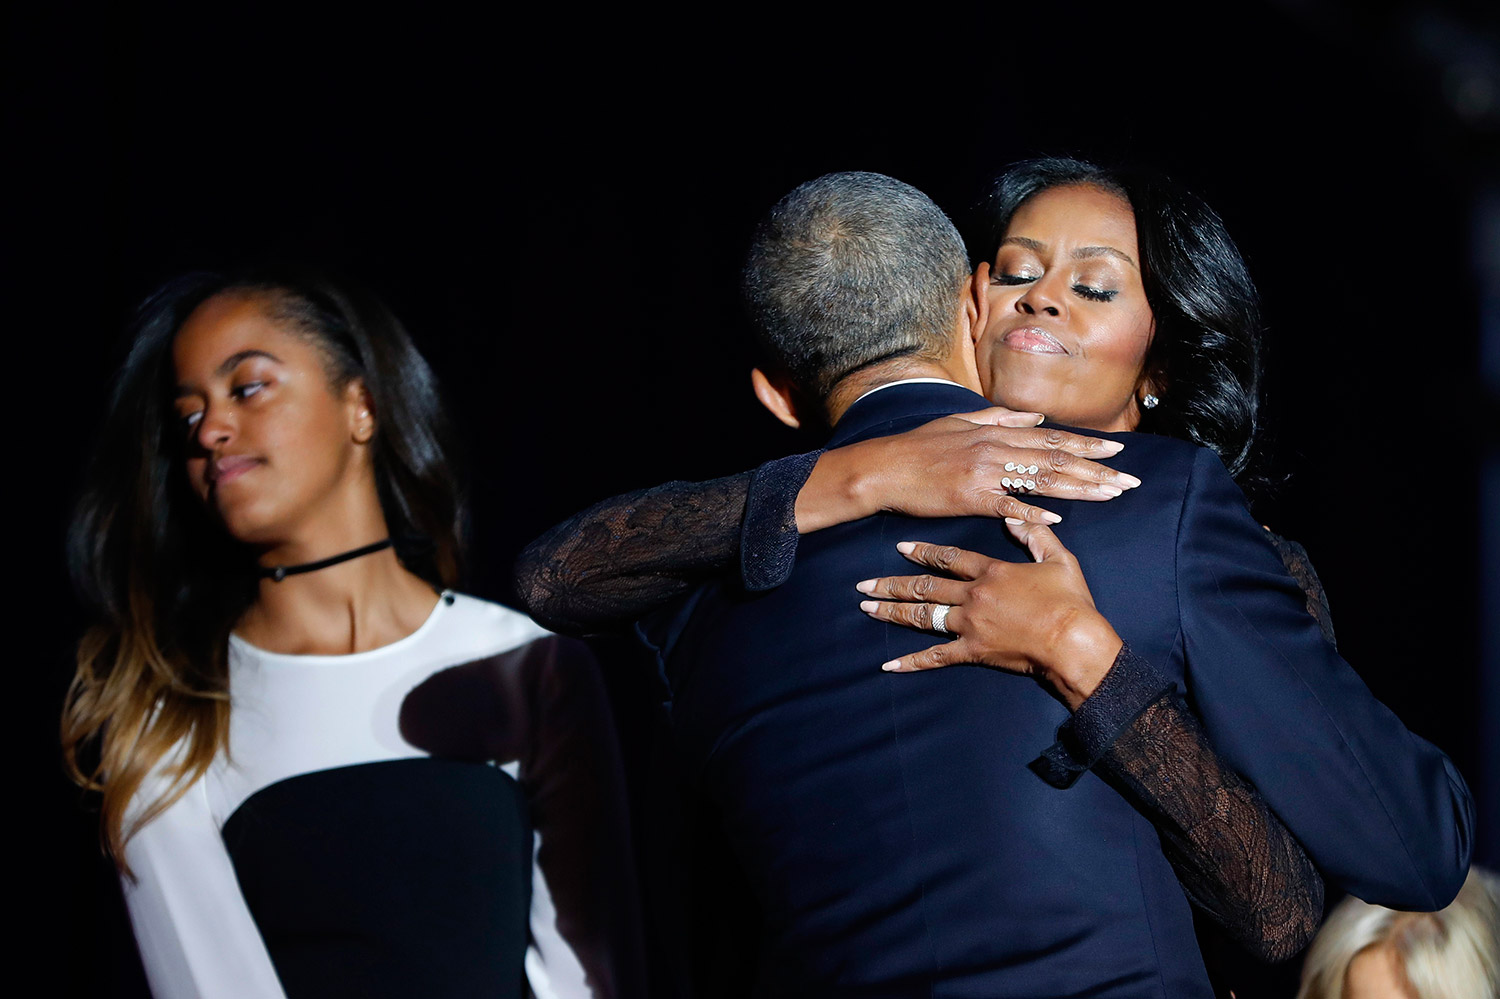 The Obamas hug after his farewell address, next to their daughter Malia. Associated Press/Pablo Martinez Monsivais